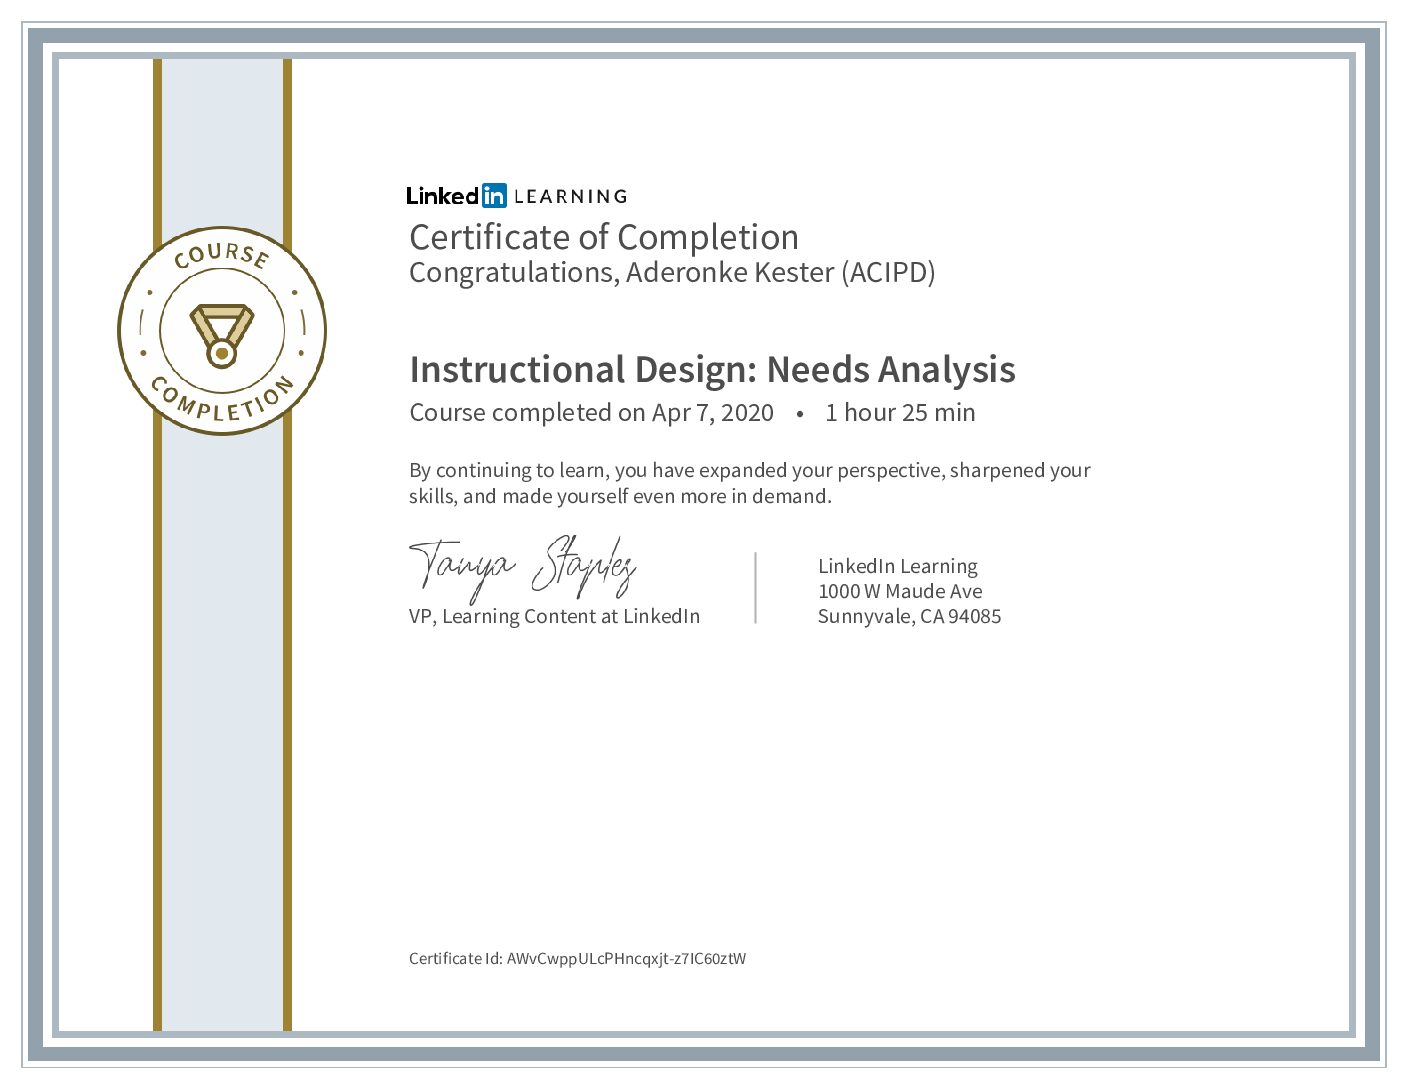 CertificateOfCompletion_Instructional Design_ Needs Analysis